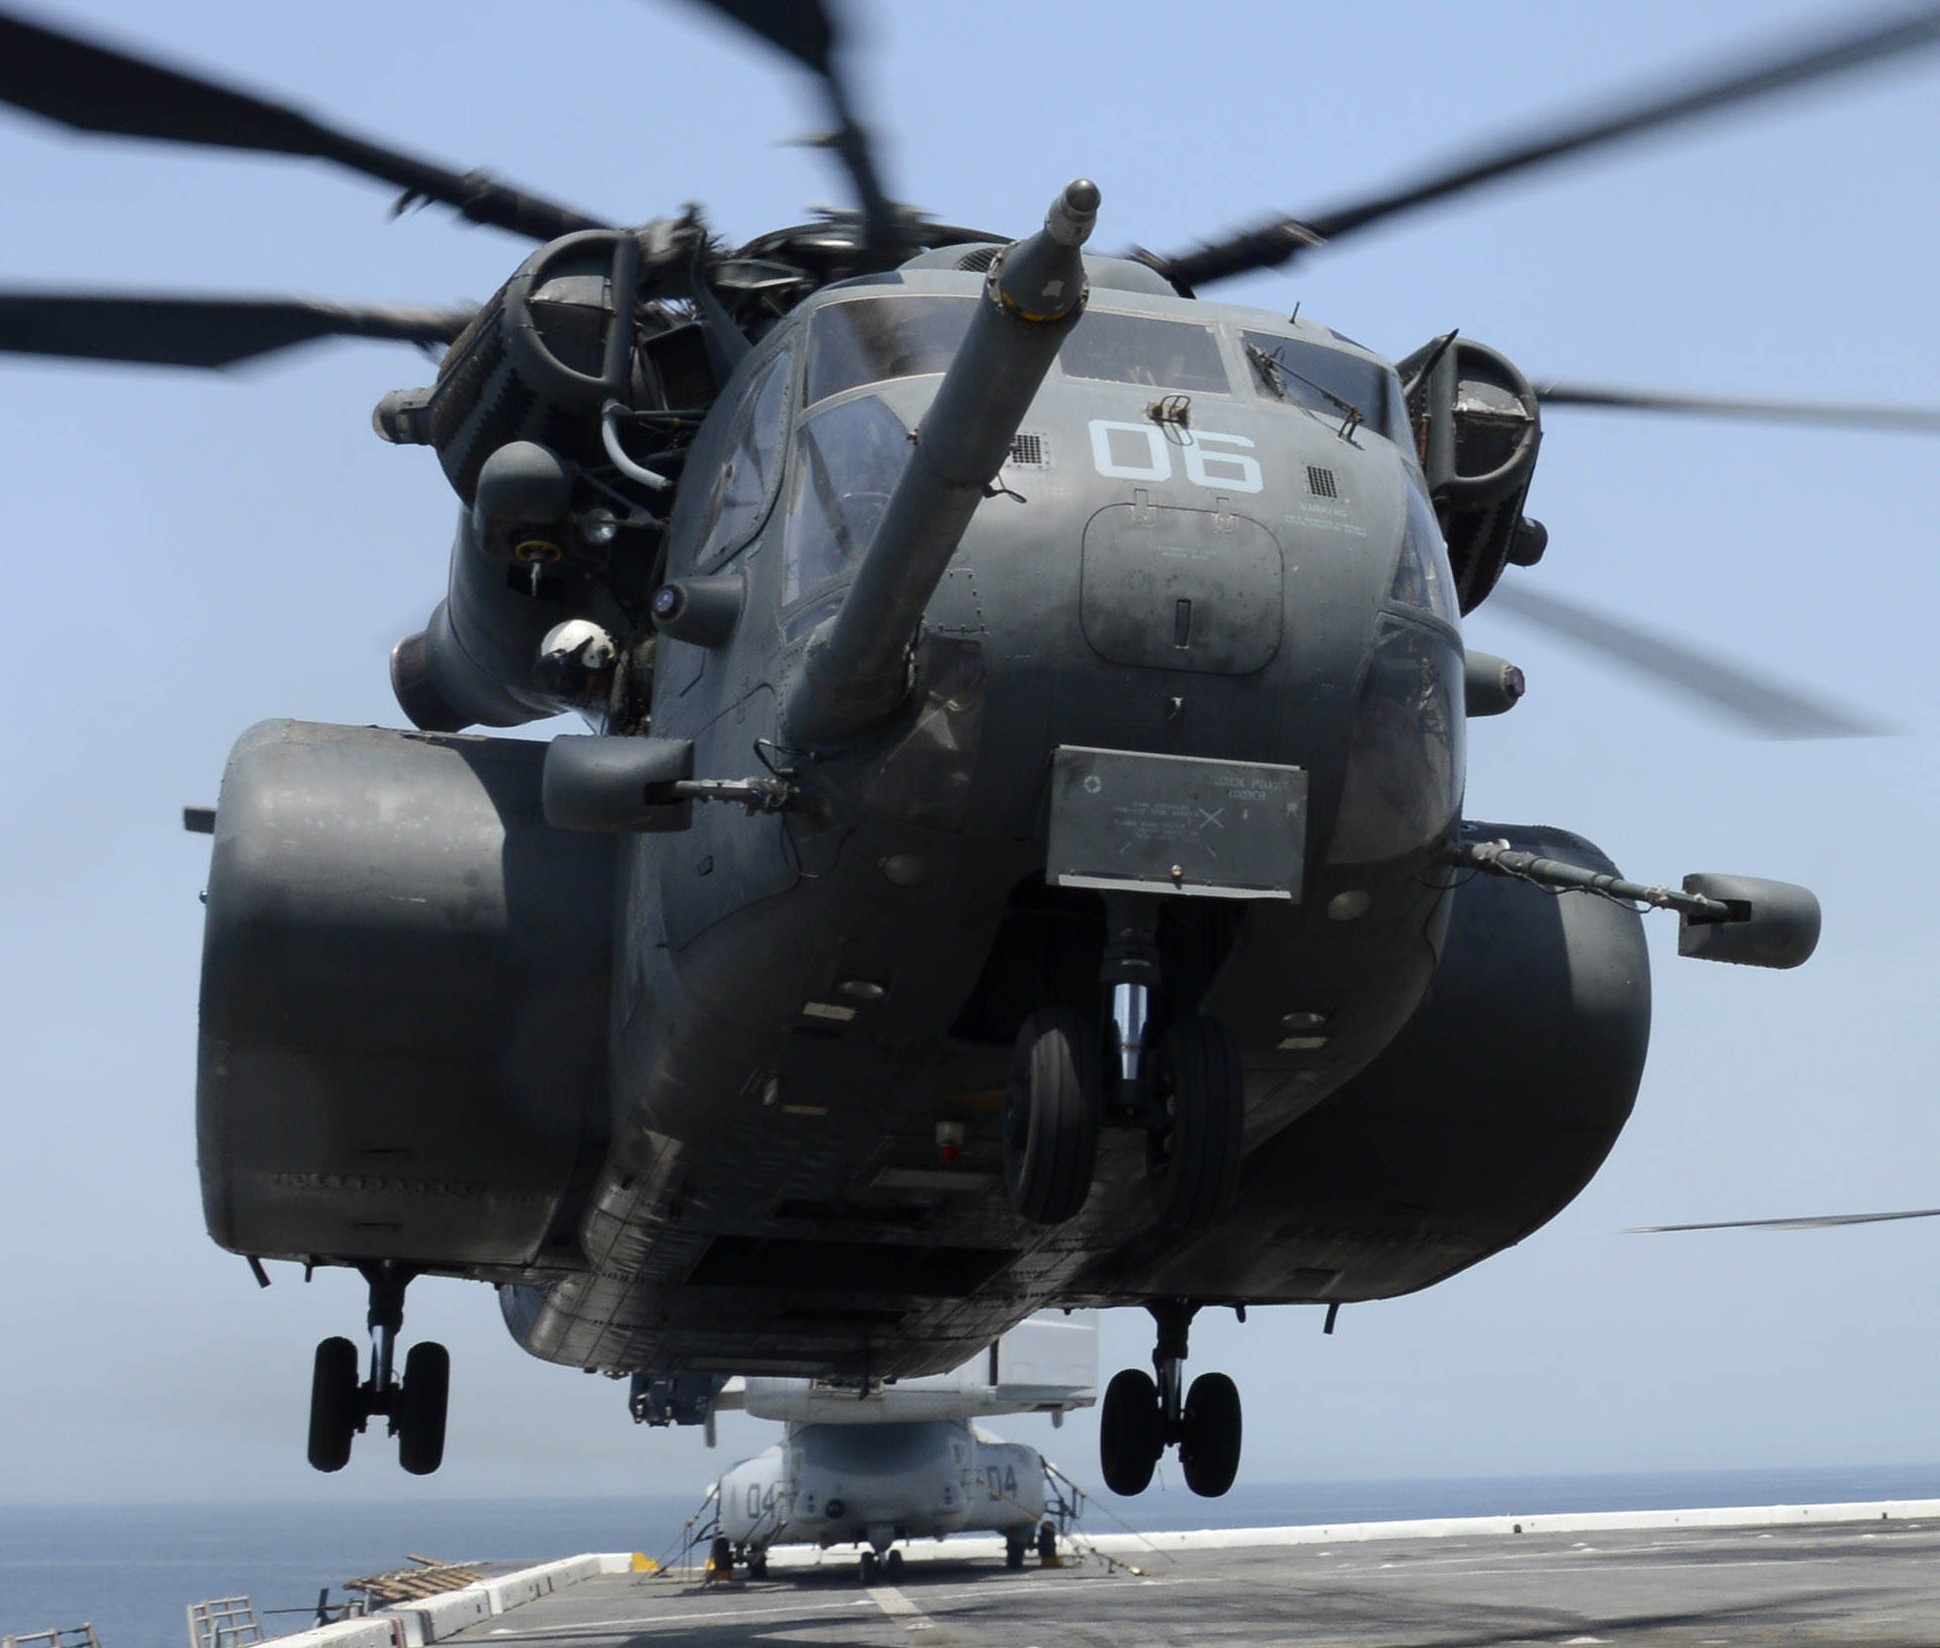 hm-15 blackhawks helicopter mine countermeasures squadron navy mh-53e sea dragon 40